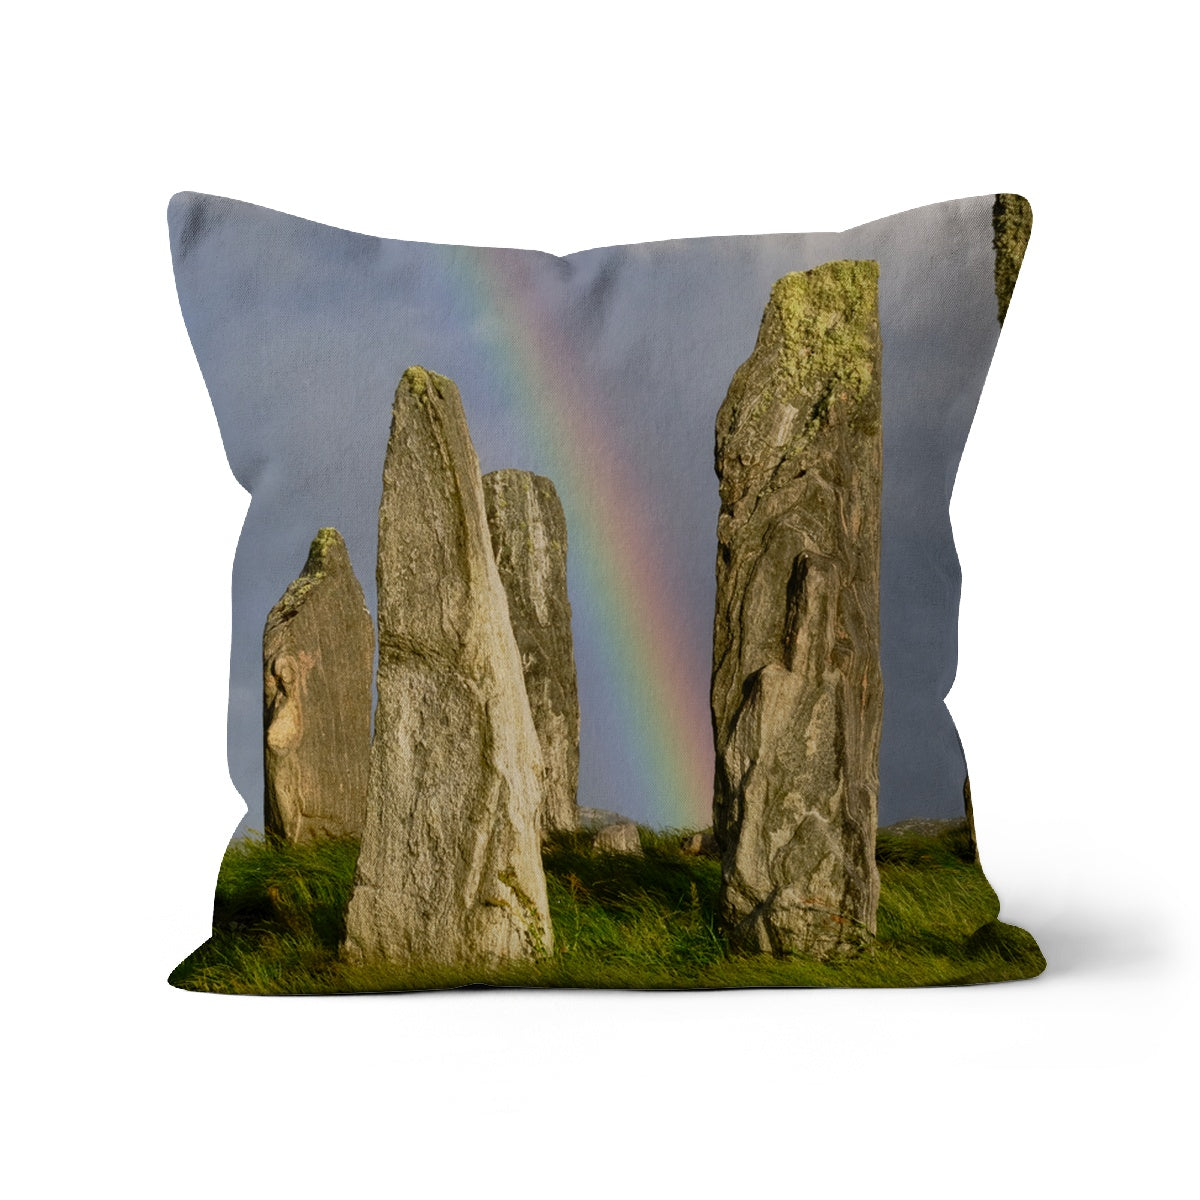 Callanish and Rainbow Cushion